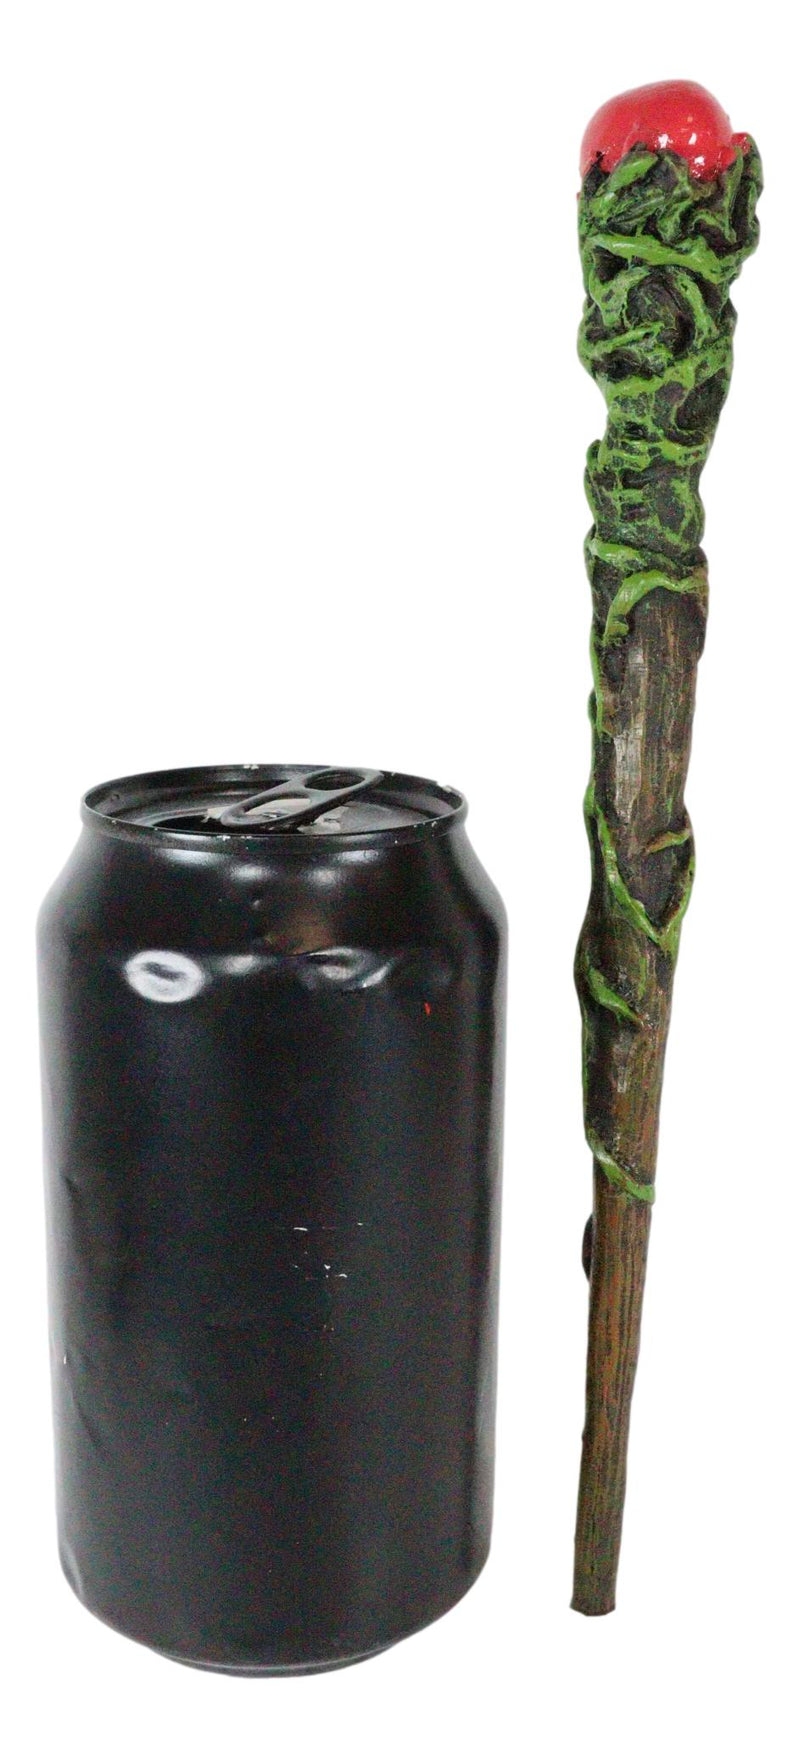 Ebros Nagini Black Orb Snake Cosplay Wand 9.5 Tall Accessory Fantasy Decor  